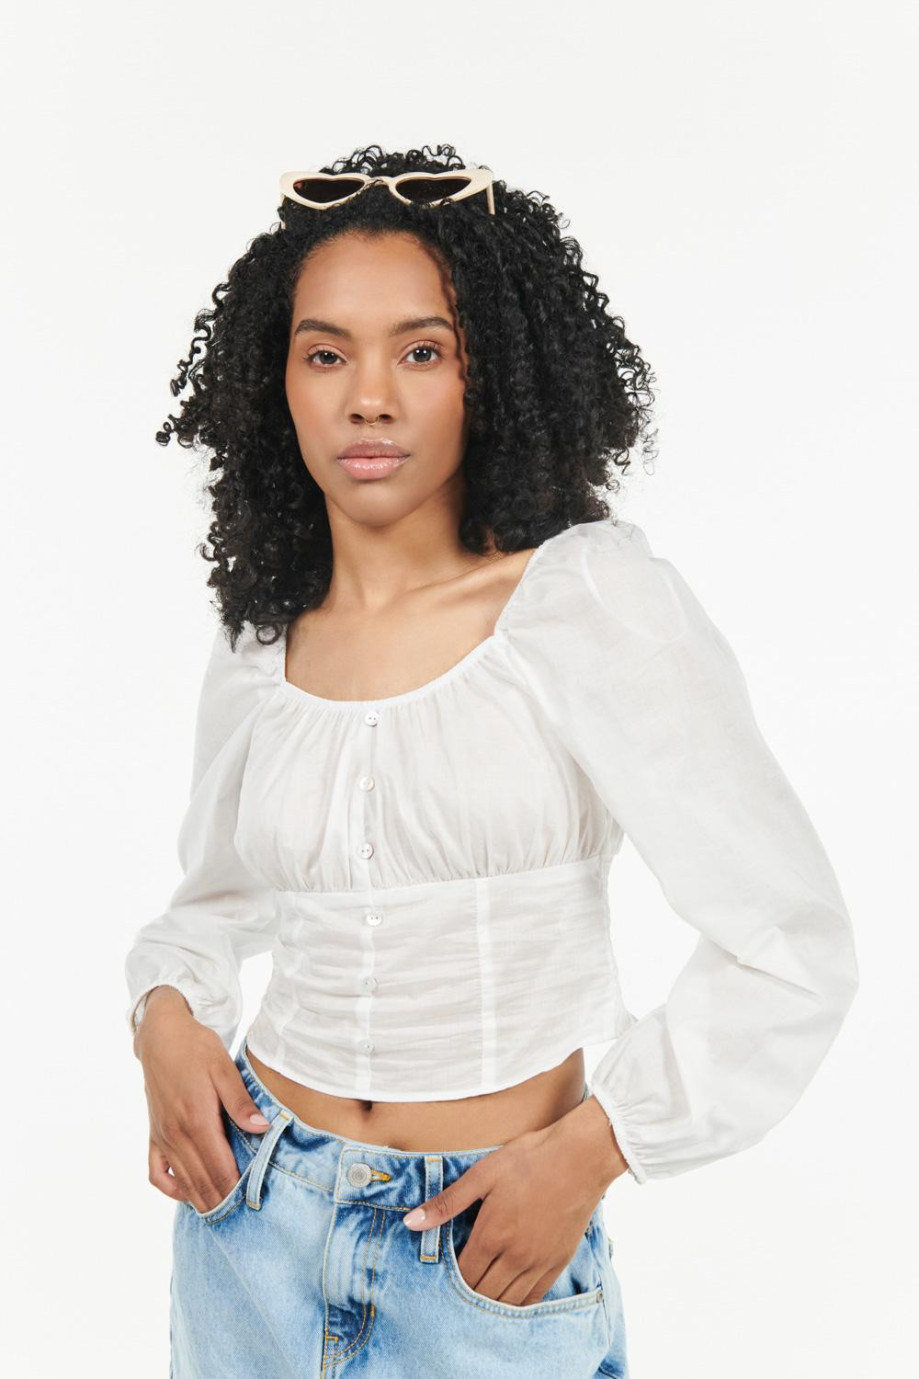 Blusa manga larga blanca con escotes y volantes decorativos